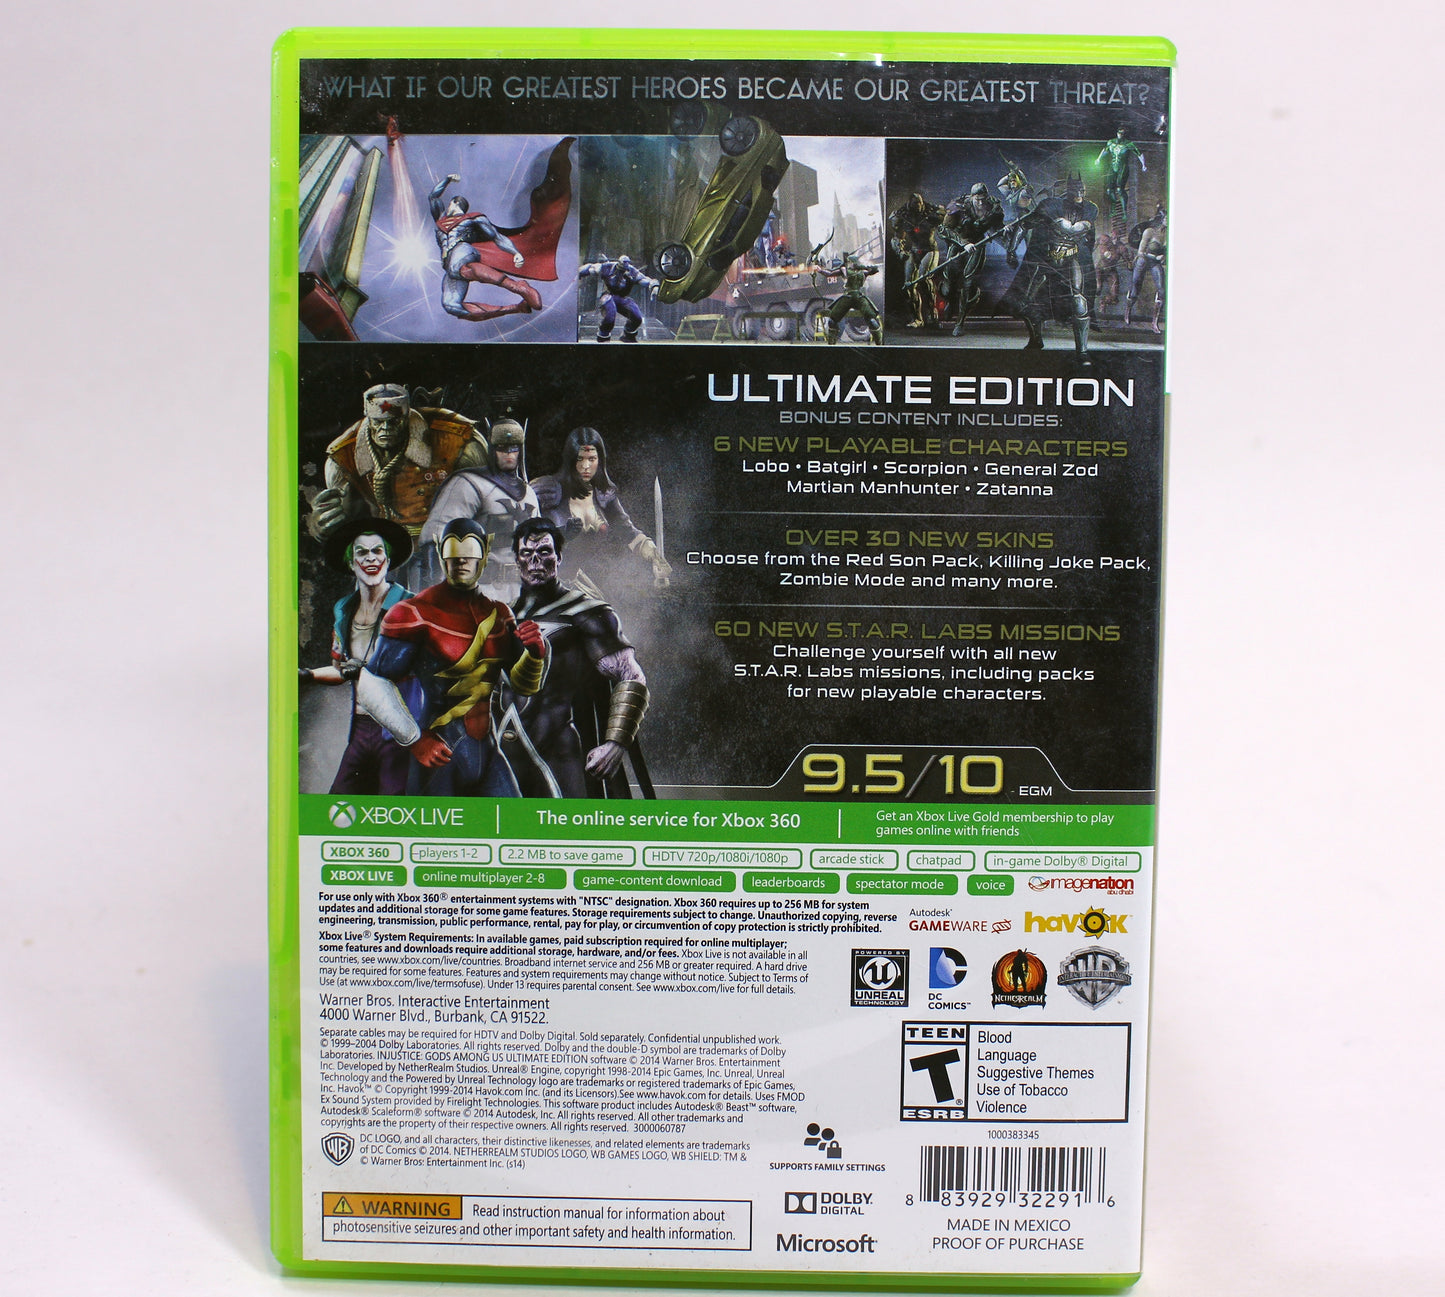 Injustice Gods Among Us Ultimate Edition (2014) Xbox 360